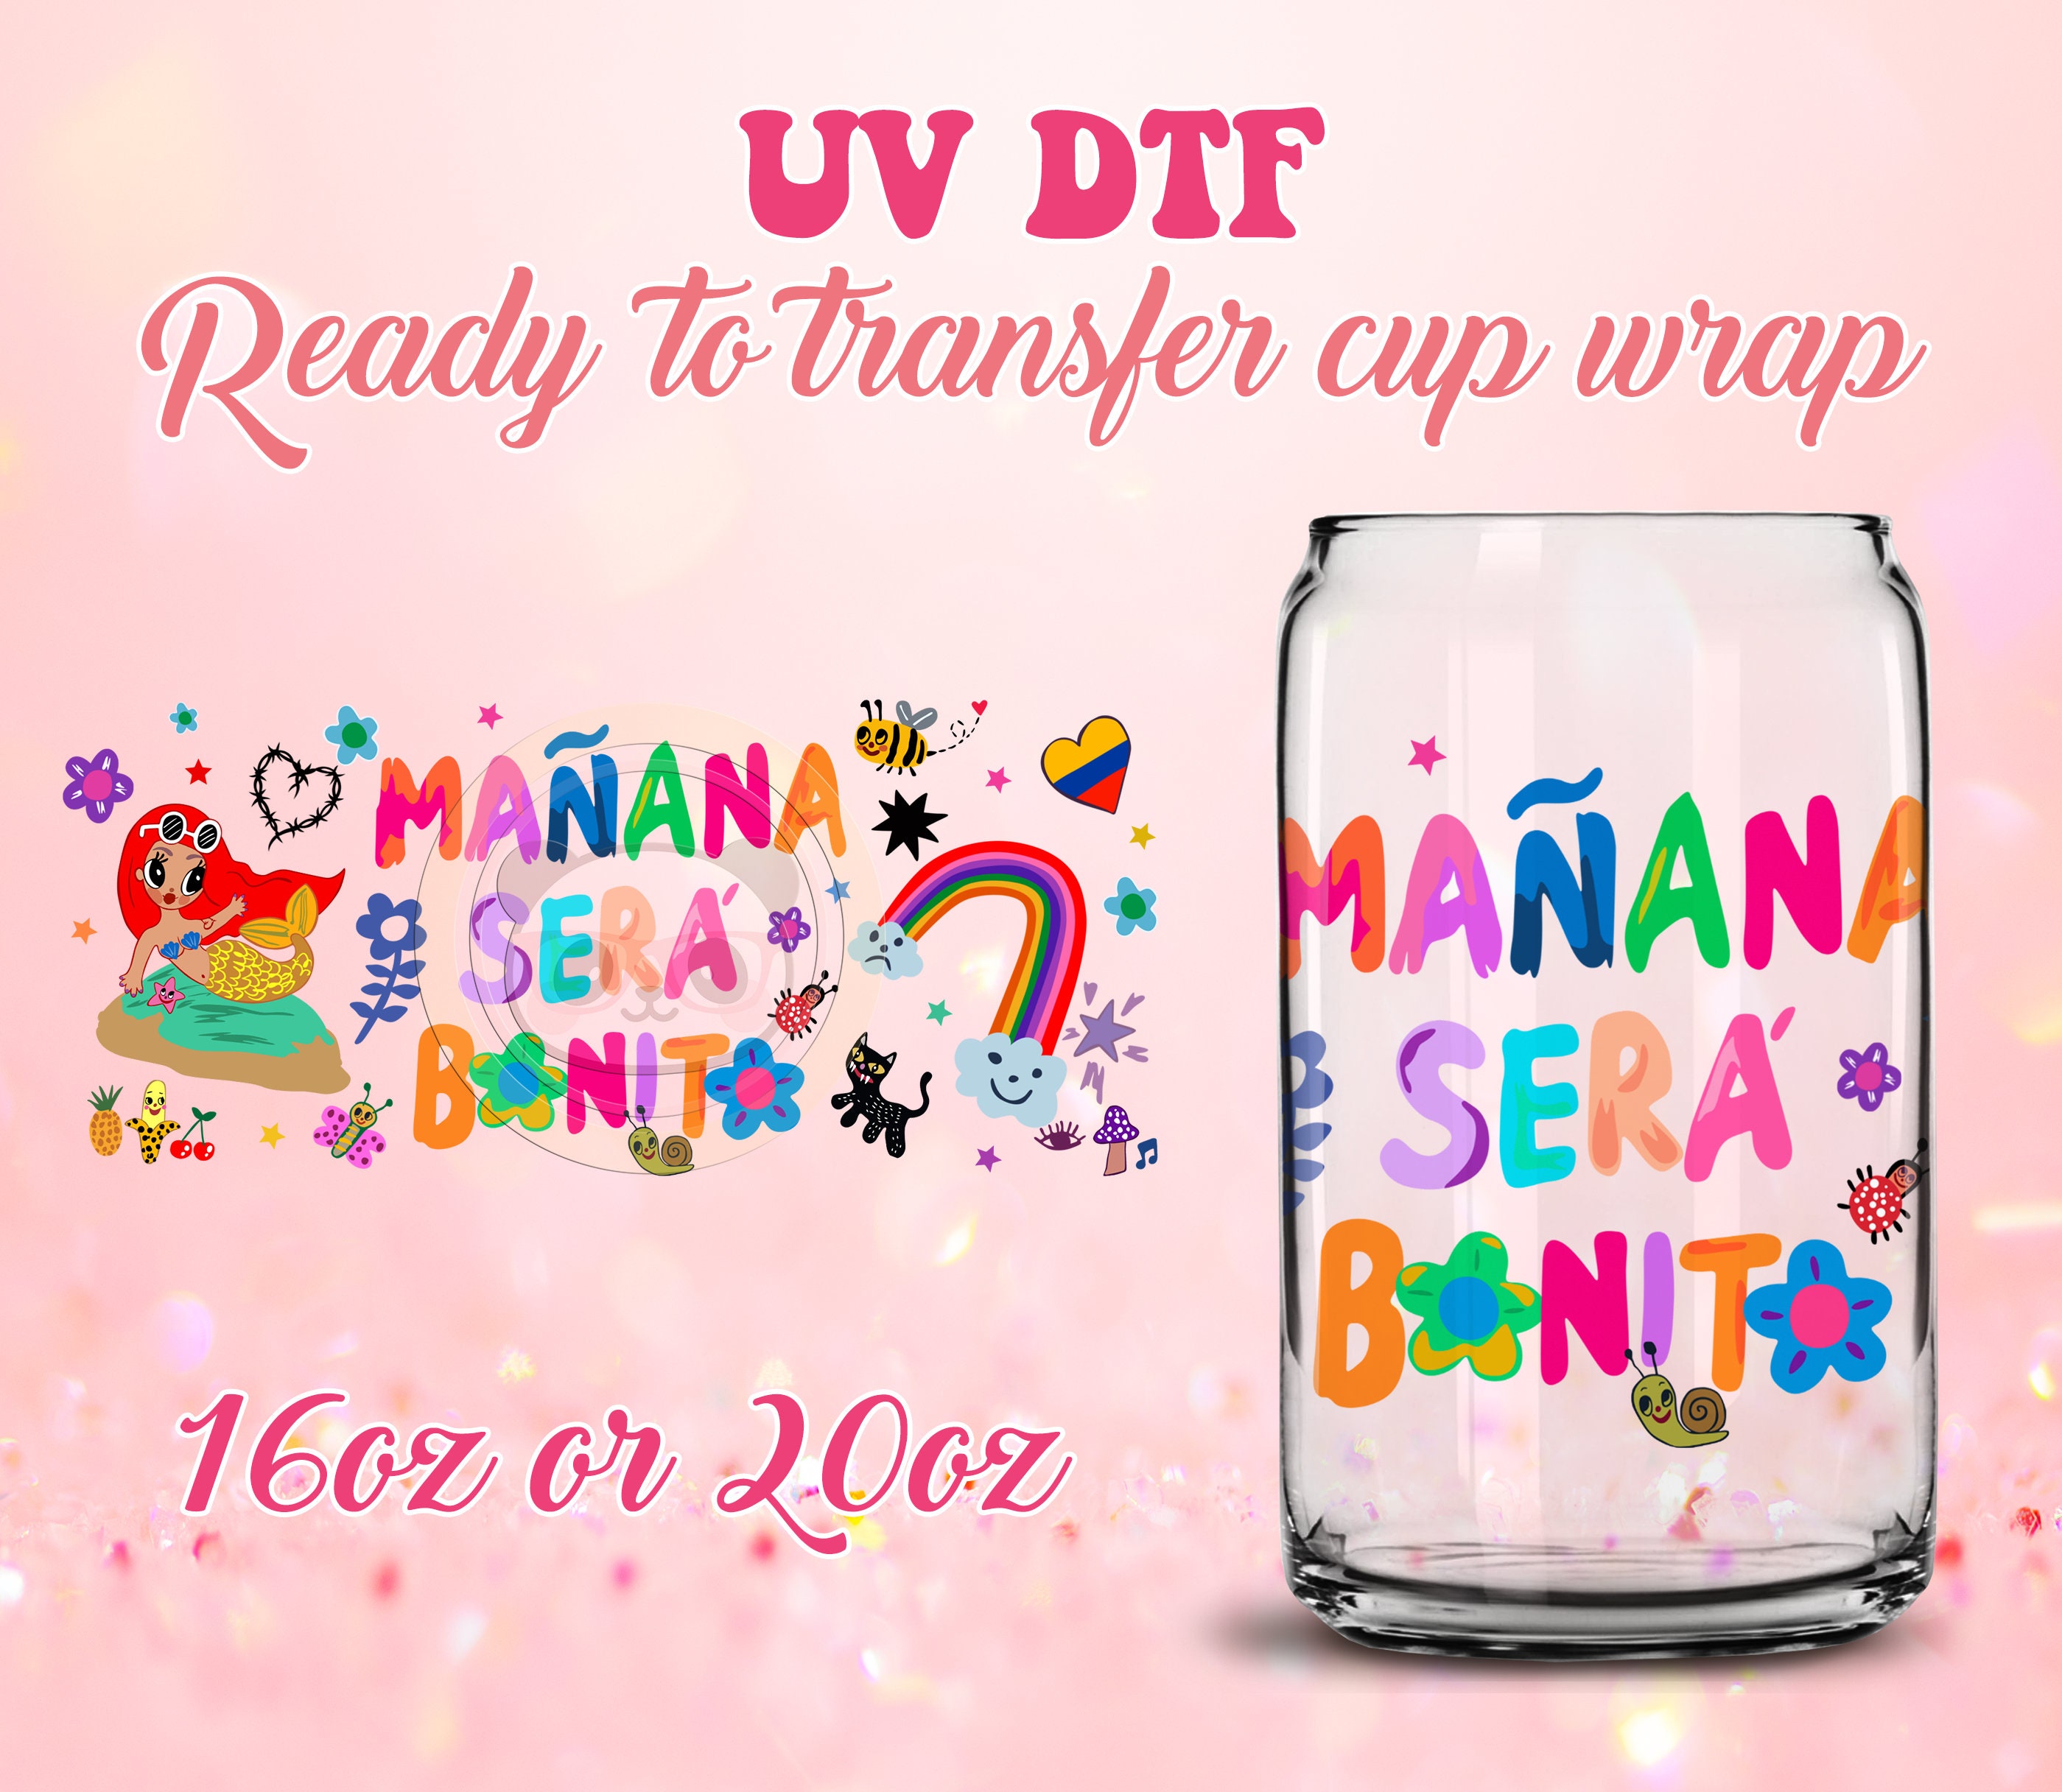 Ginger Mugs UV-DTF Cup Wrap